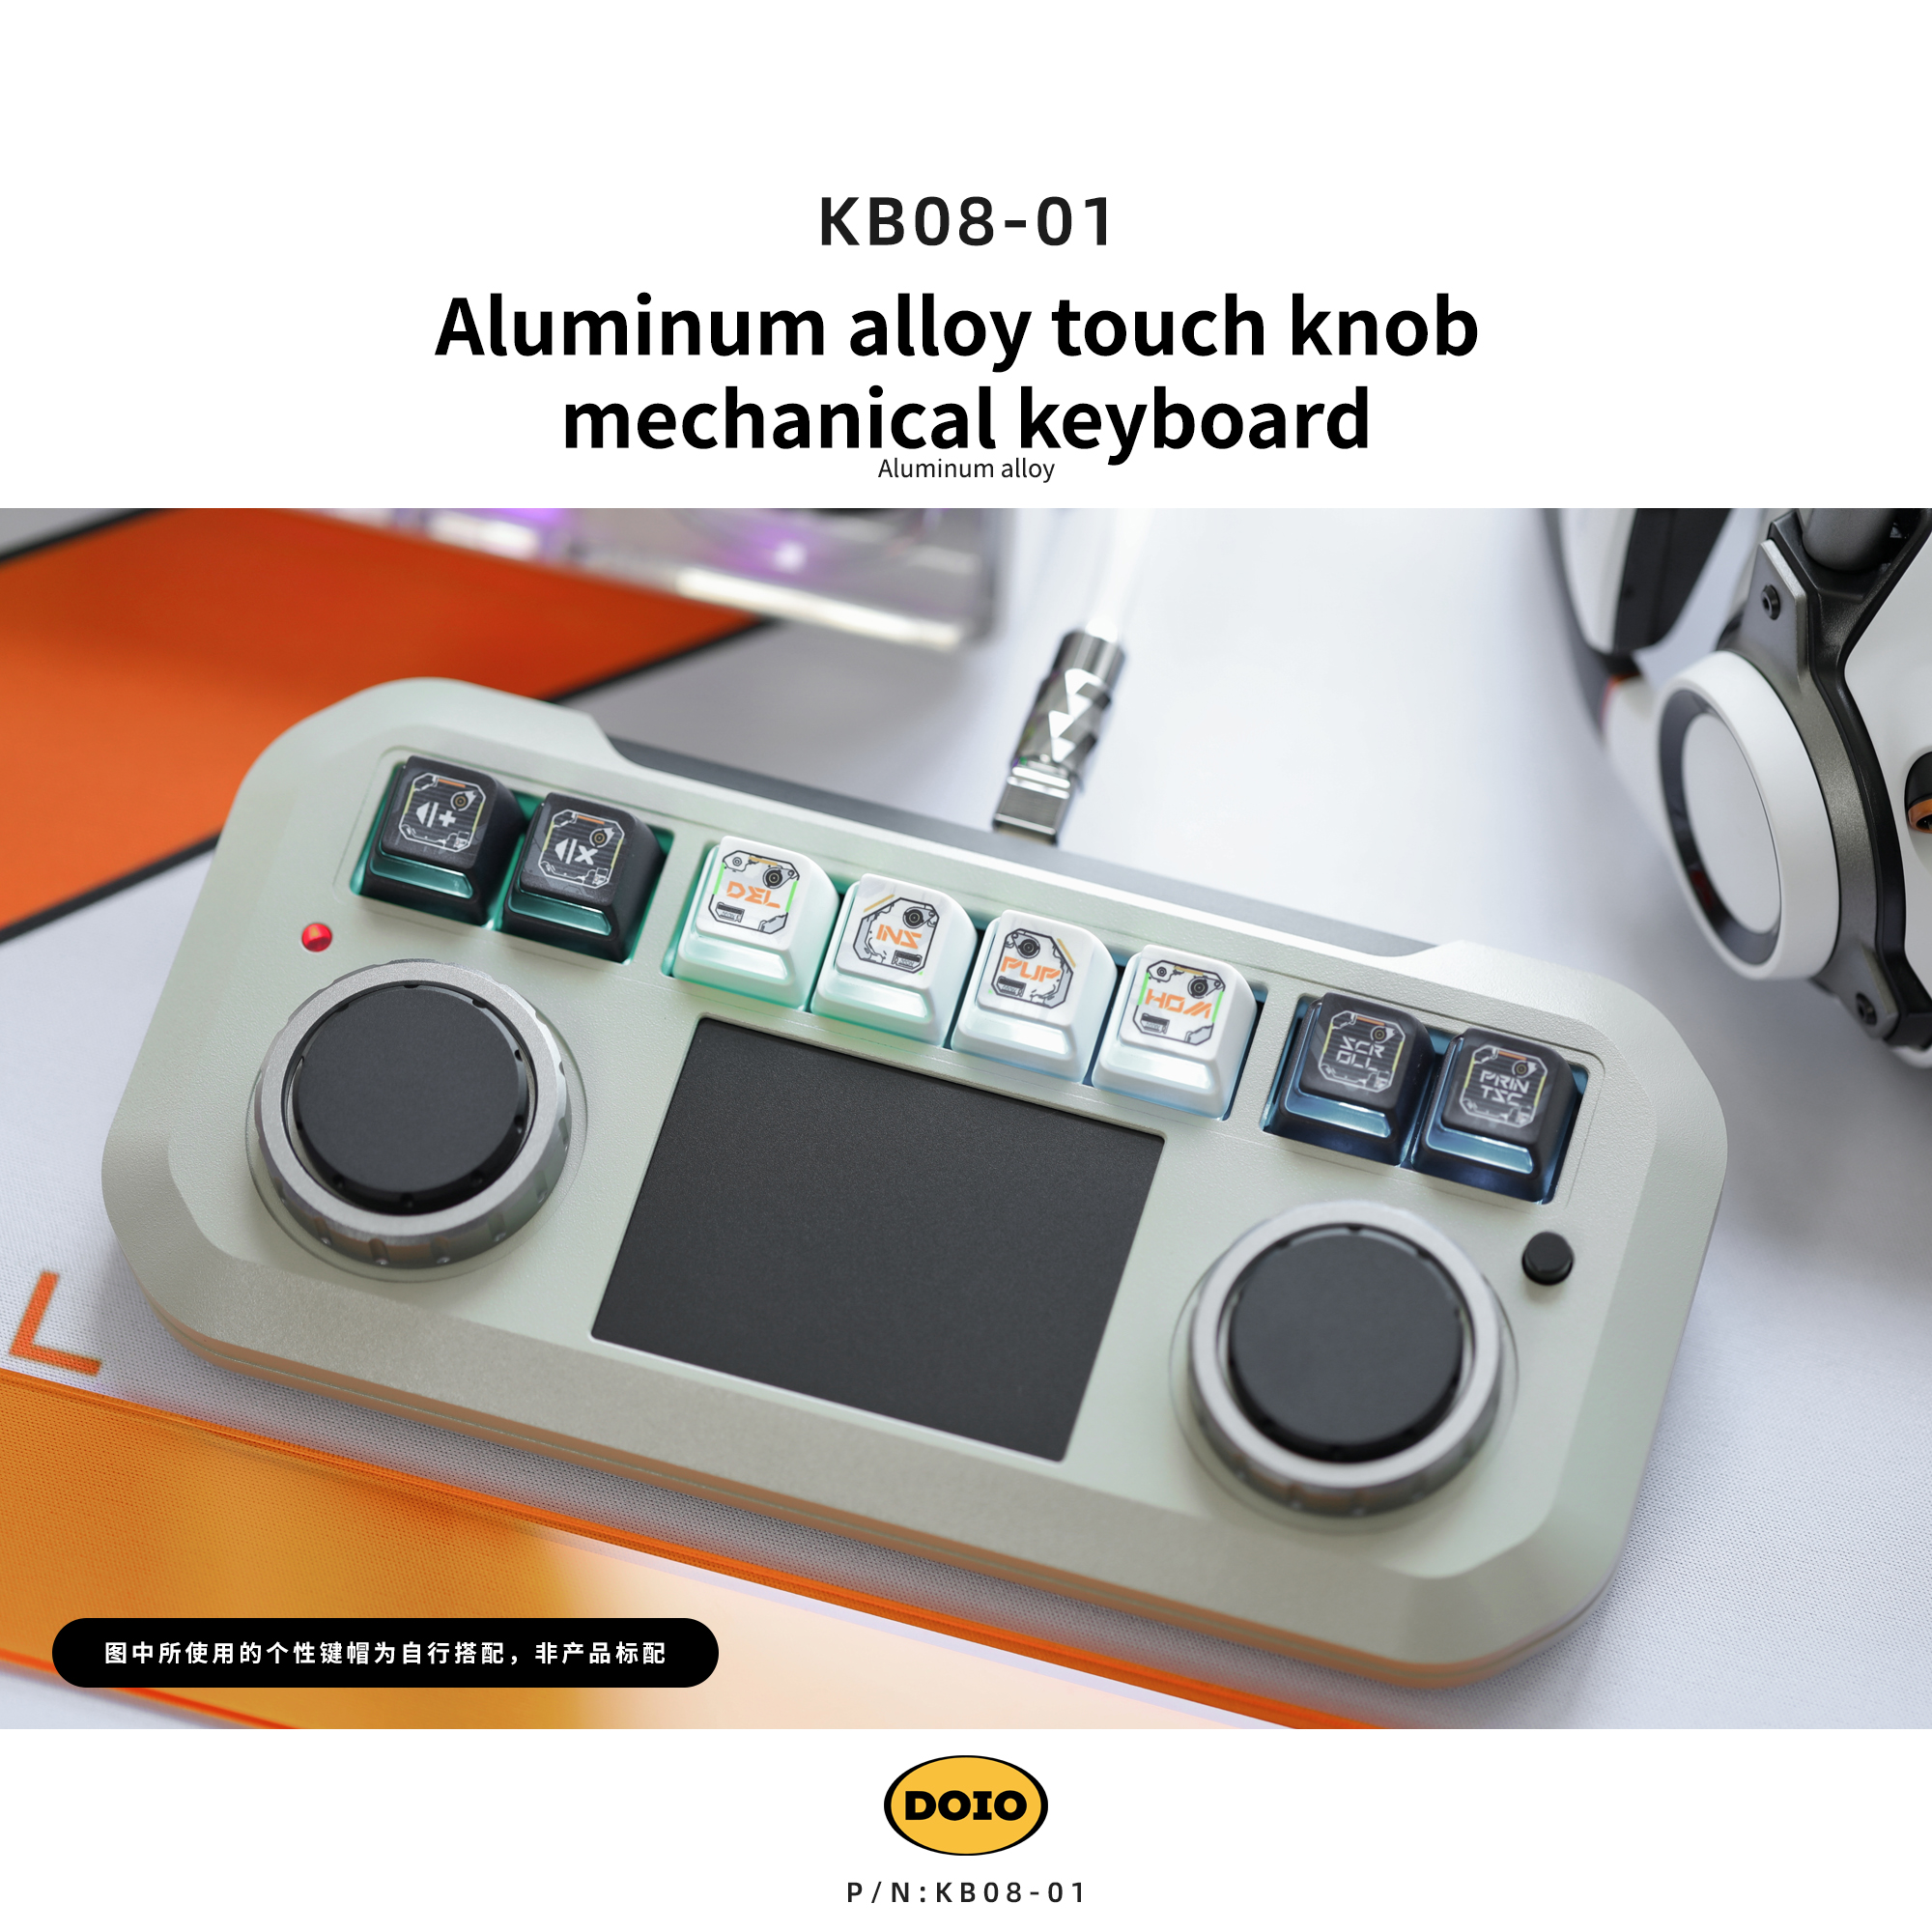 Aluminum alloy touch knob mechanical keyboard KB08-01